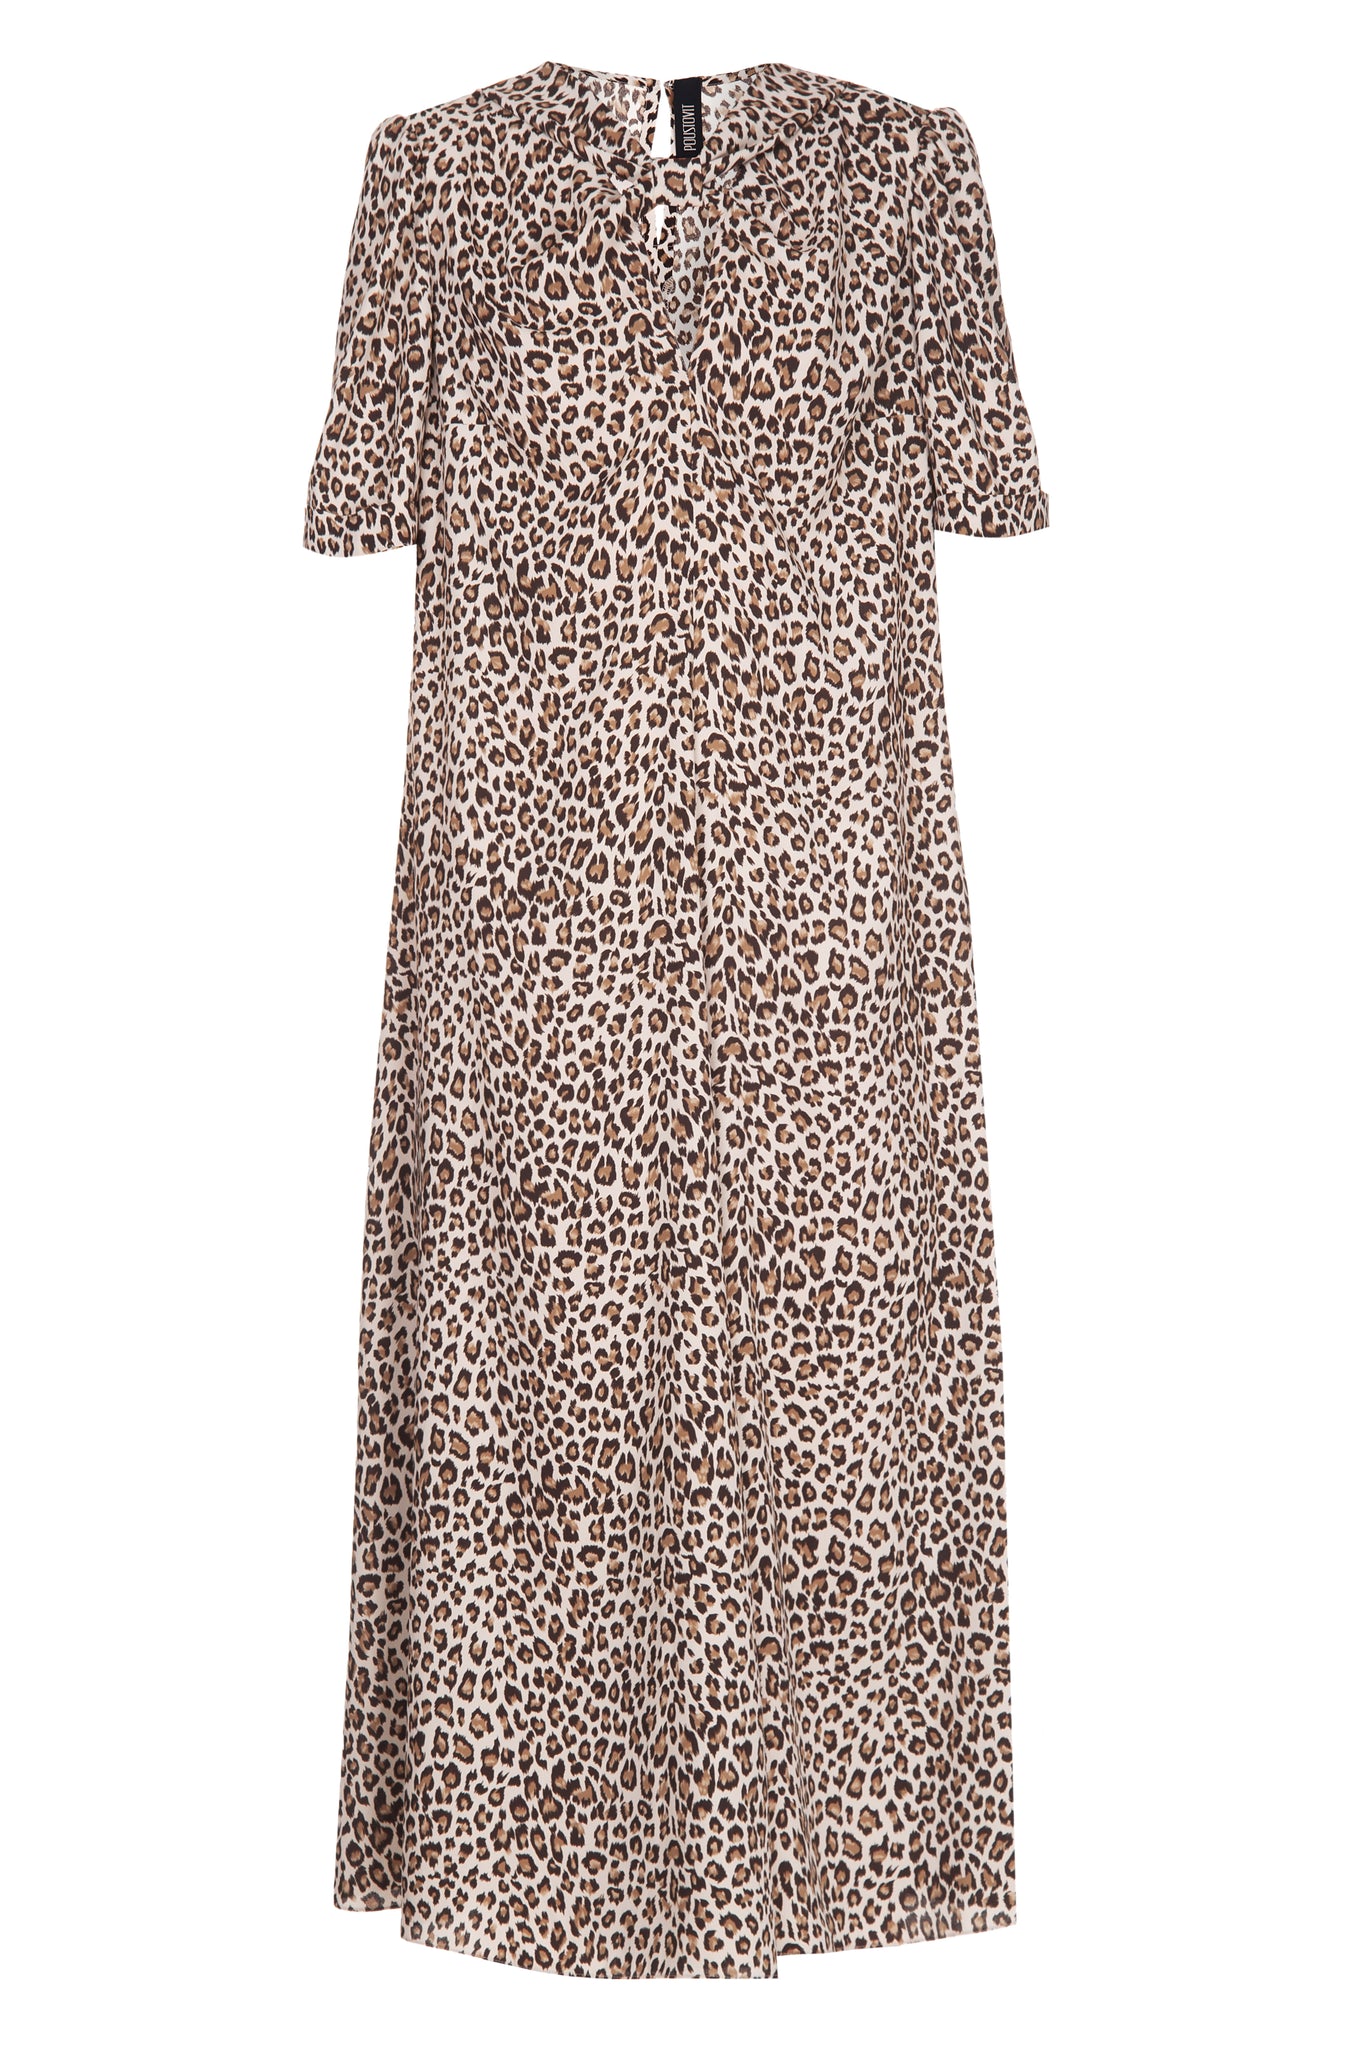 Leopard printed dress